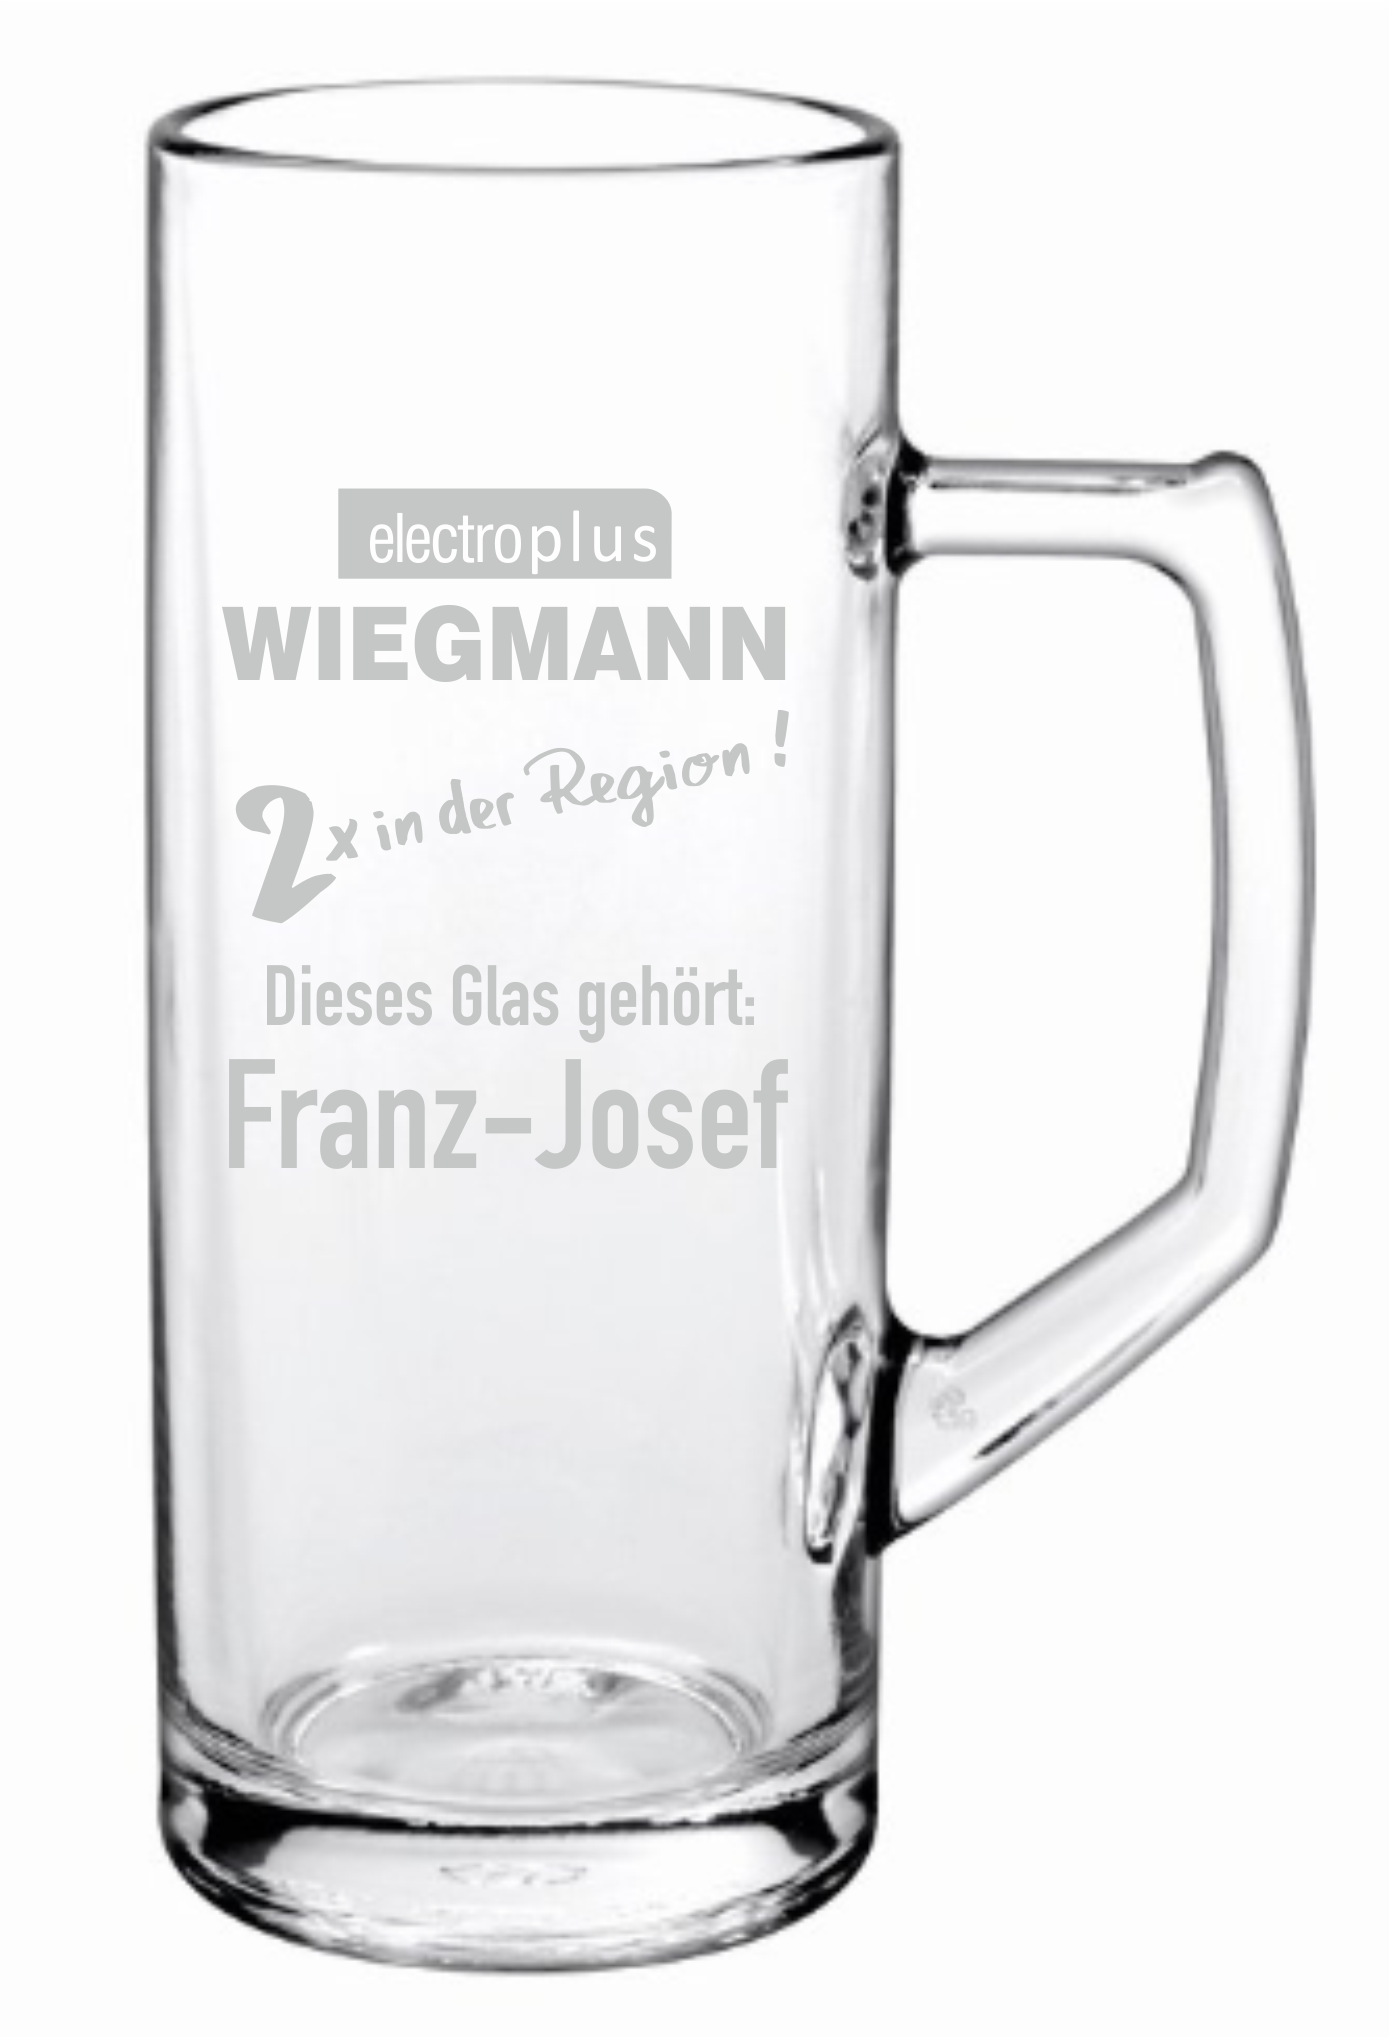 BIERGLAS 0,5 L Bierkrug Bierseidel Bier Glas